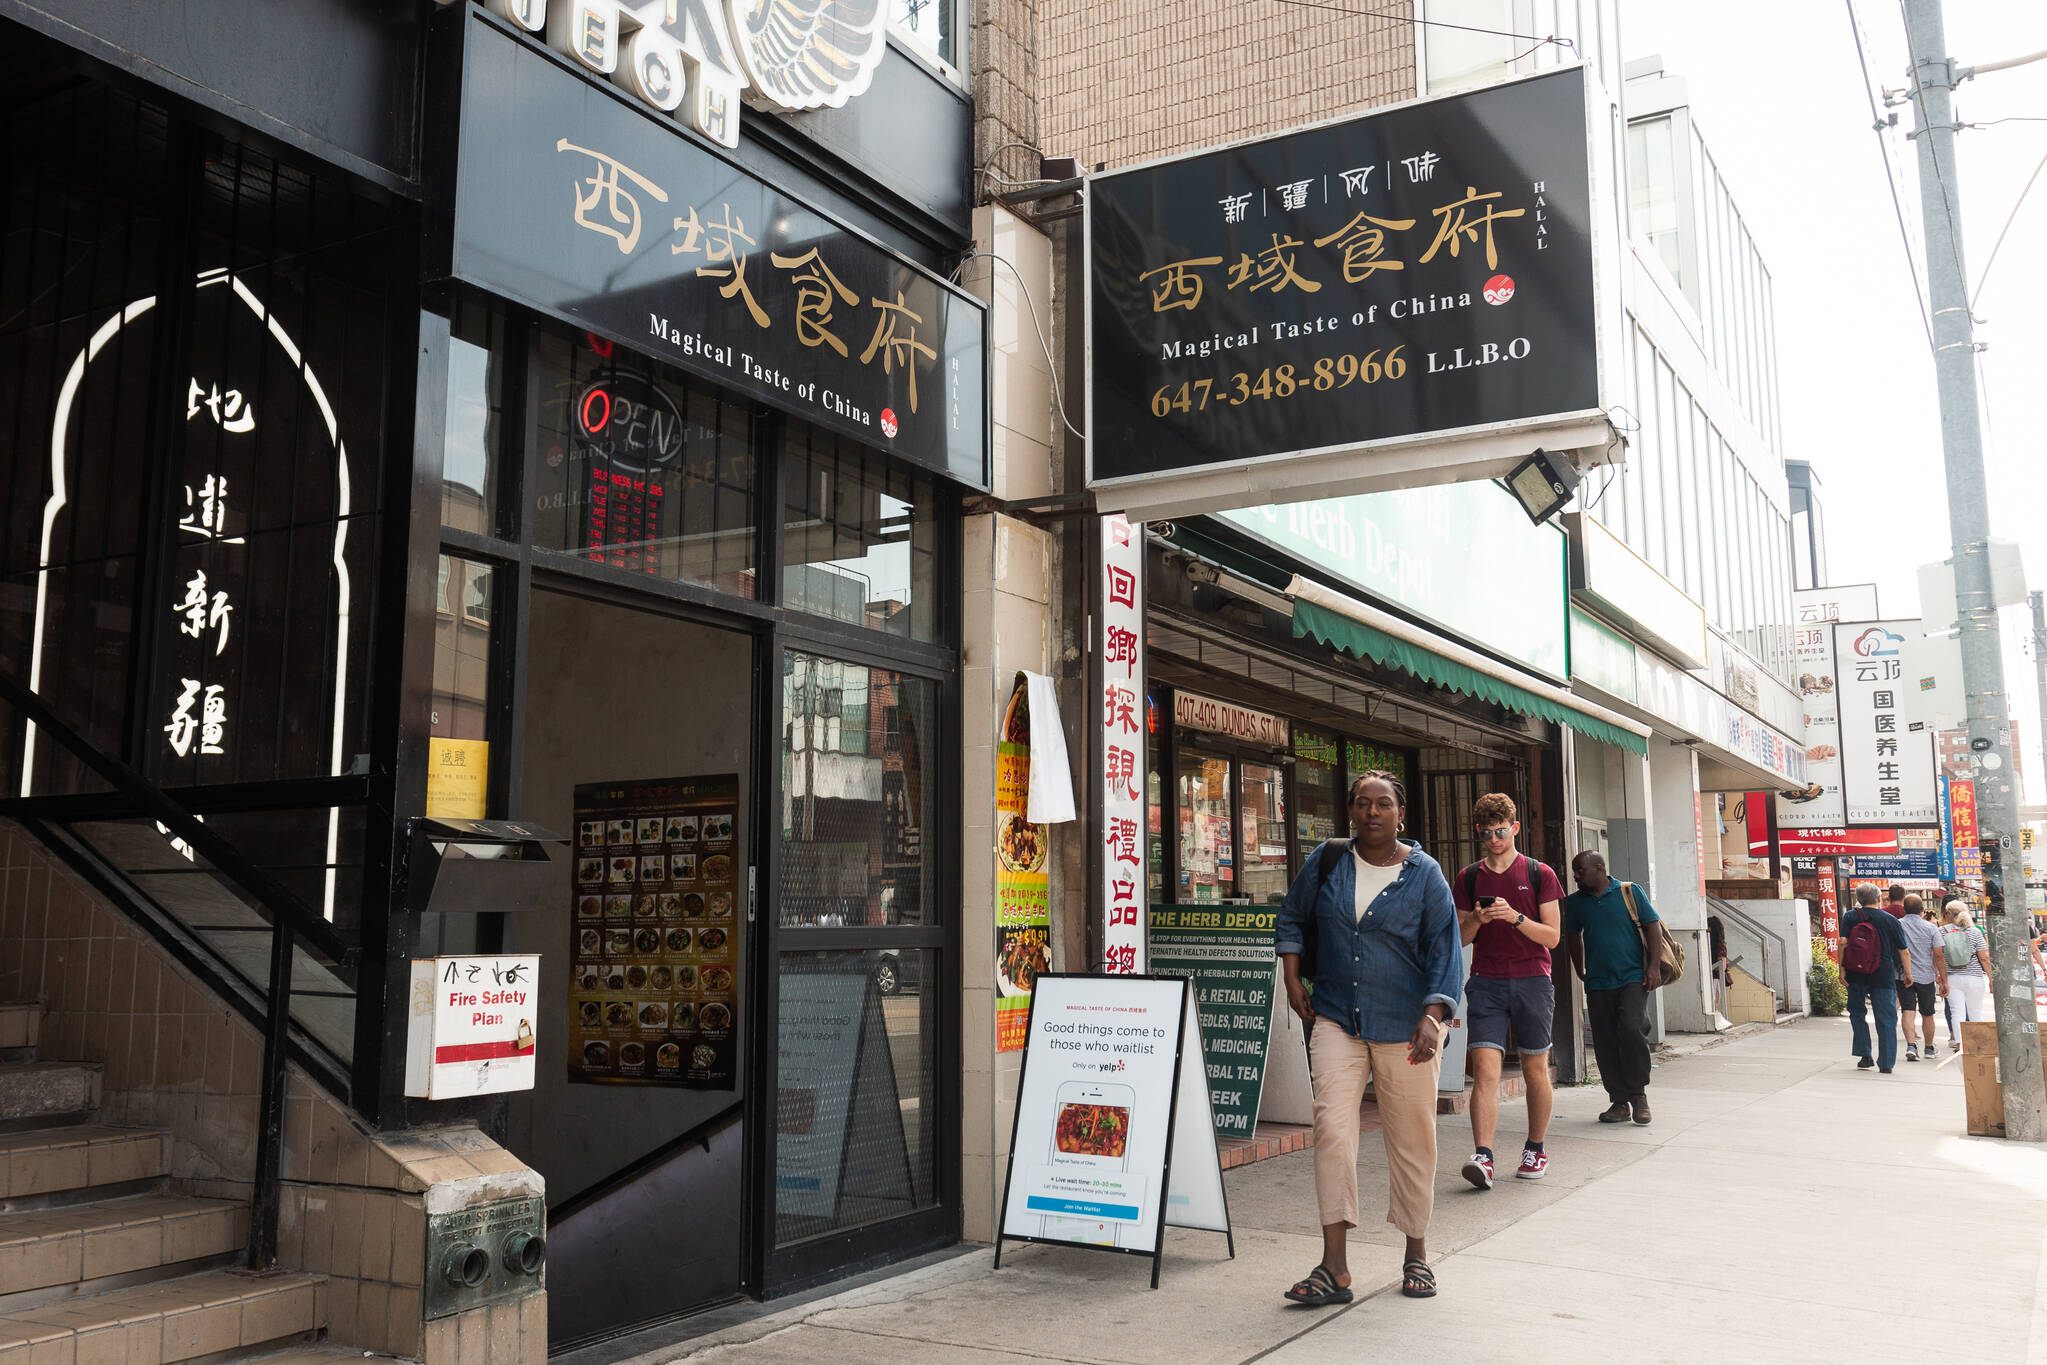 Magical Taste of China Toronto